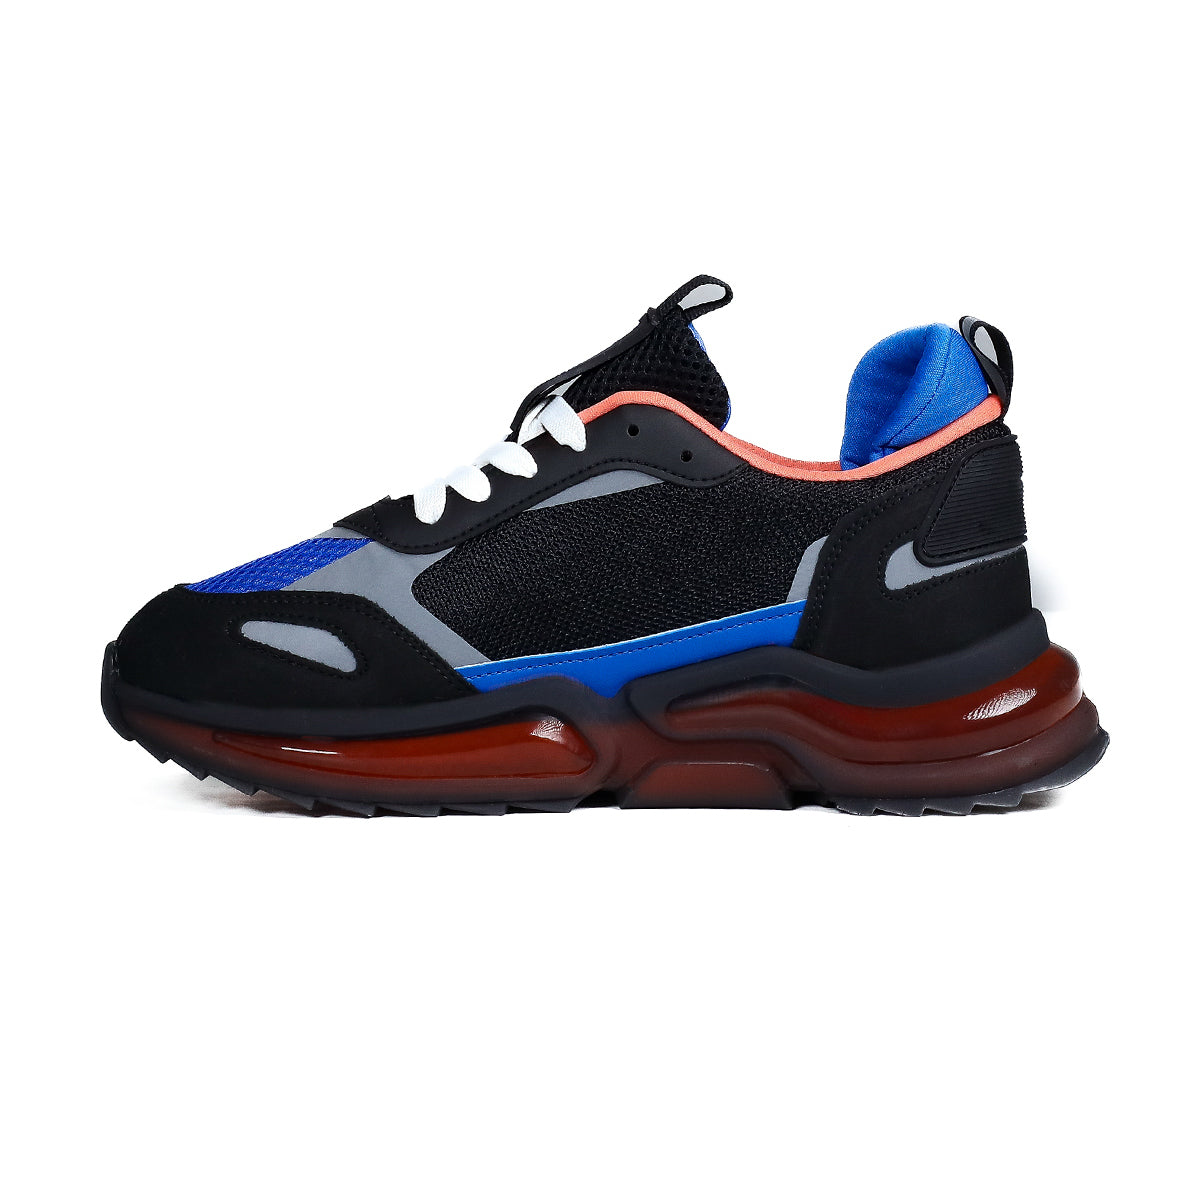 DI MILANO Siyah Turuncu Mavi Erkek Sneakers Spor Ayakkabı